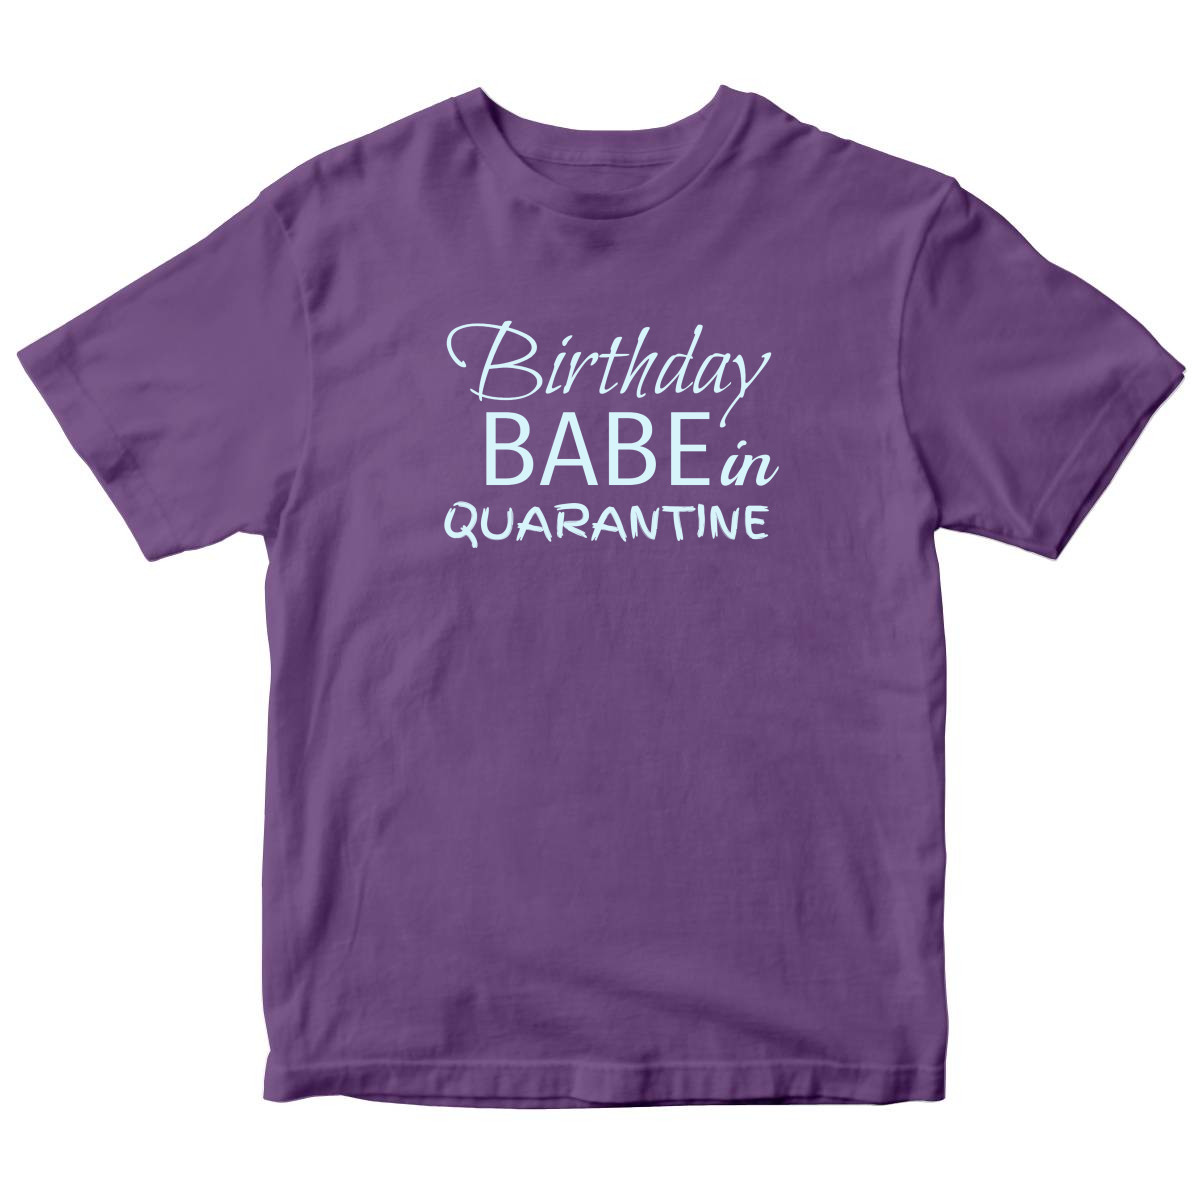 Birthday Babe in Quarantine Kids T-shirt | Purple